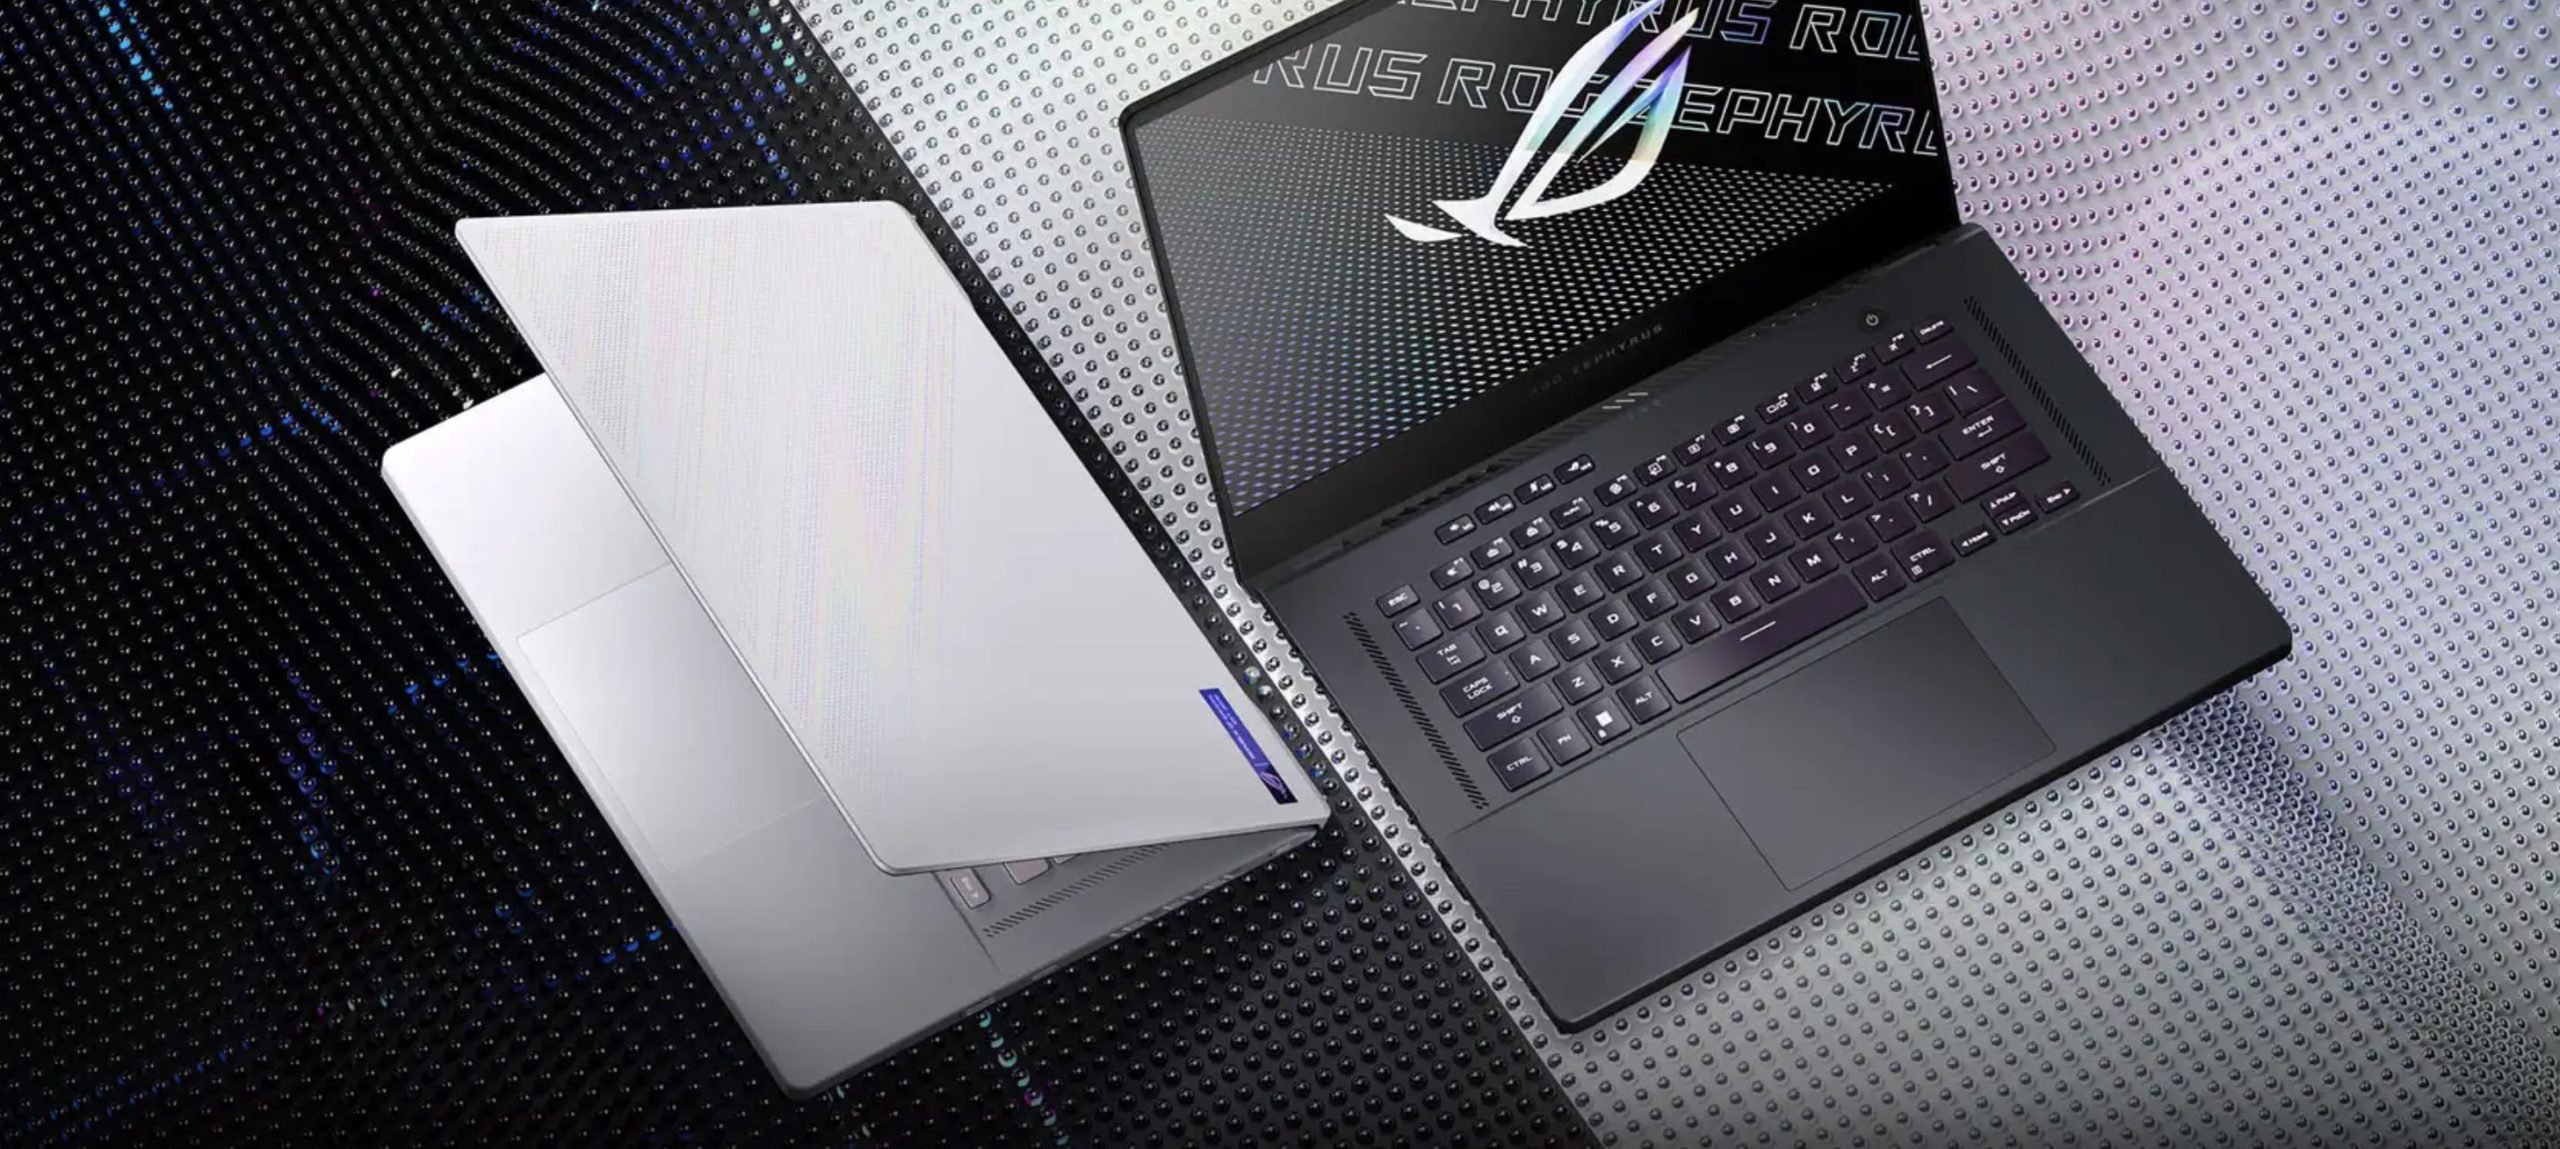 Top 5 Gaming Laptops to buy in 2022